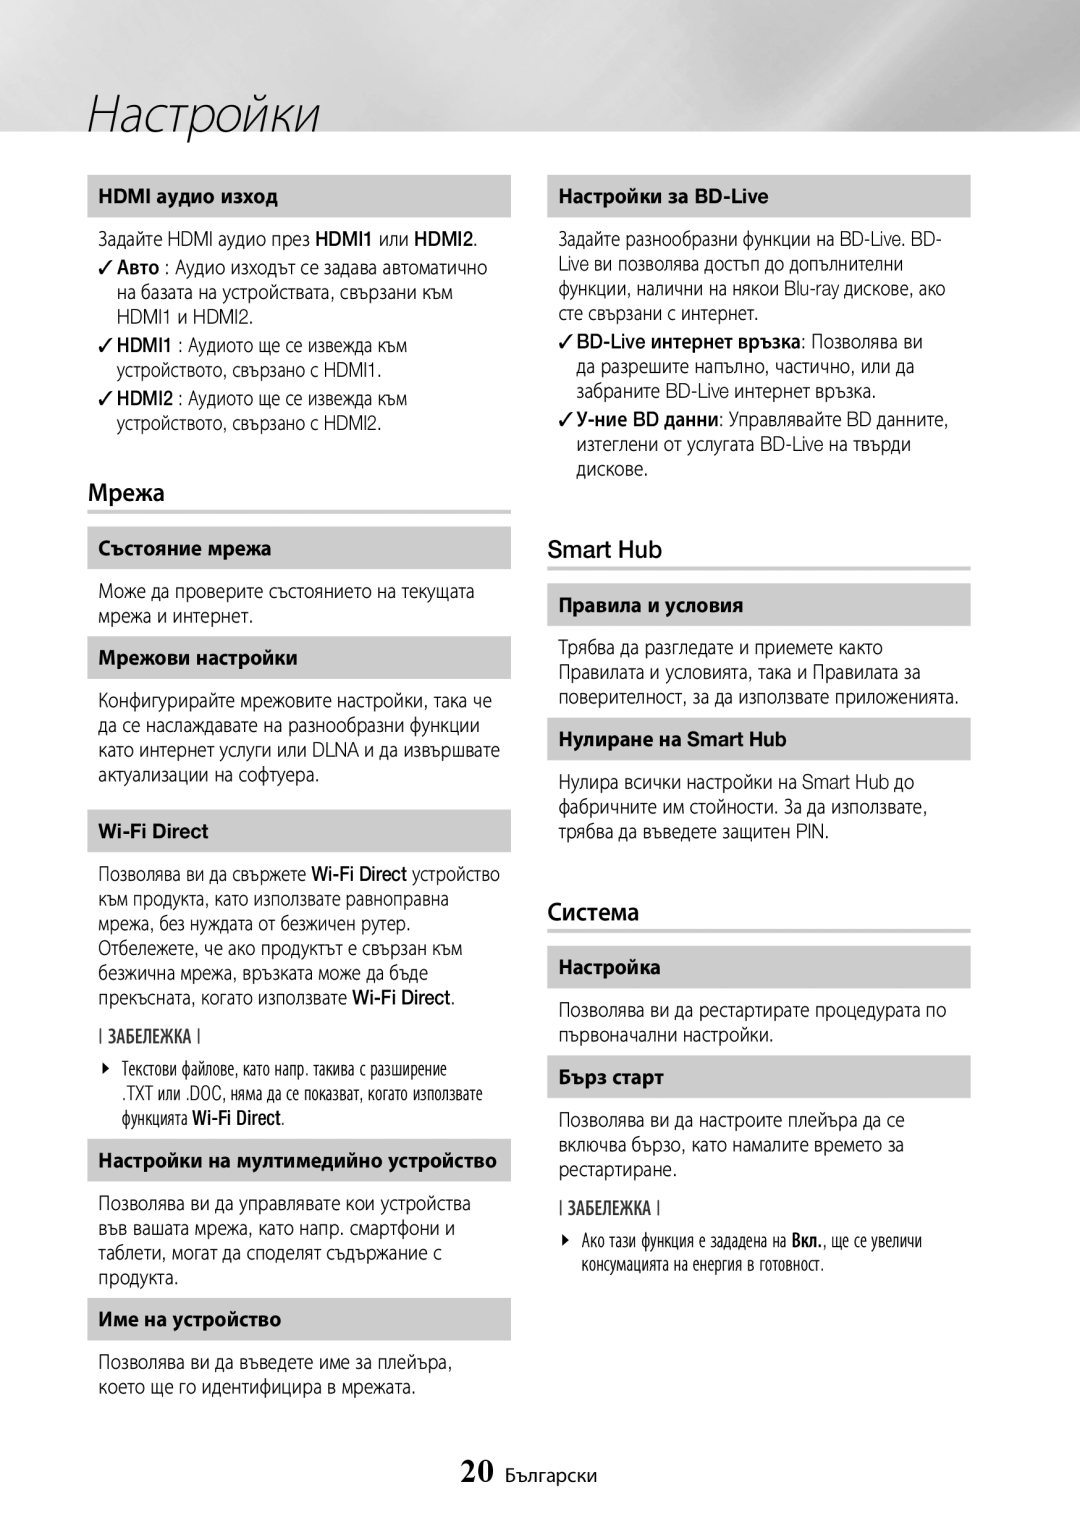 Samsung BD-J7500/EN manual Мрежа, Smart Hub, Система, Настройки, Забележка 